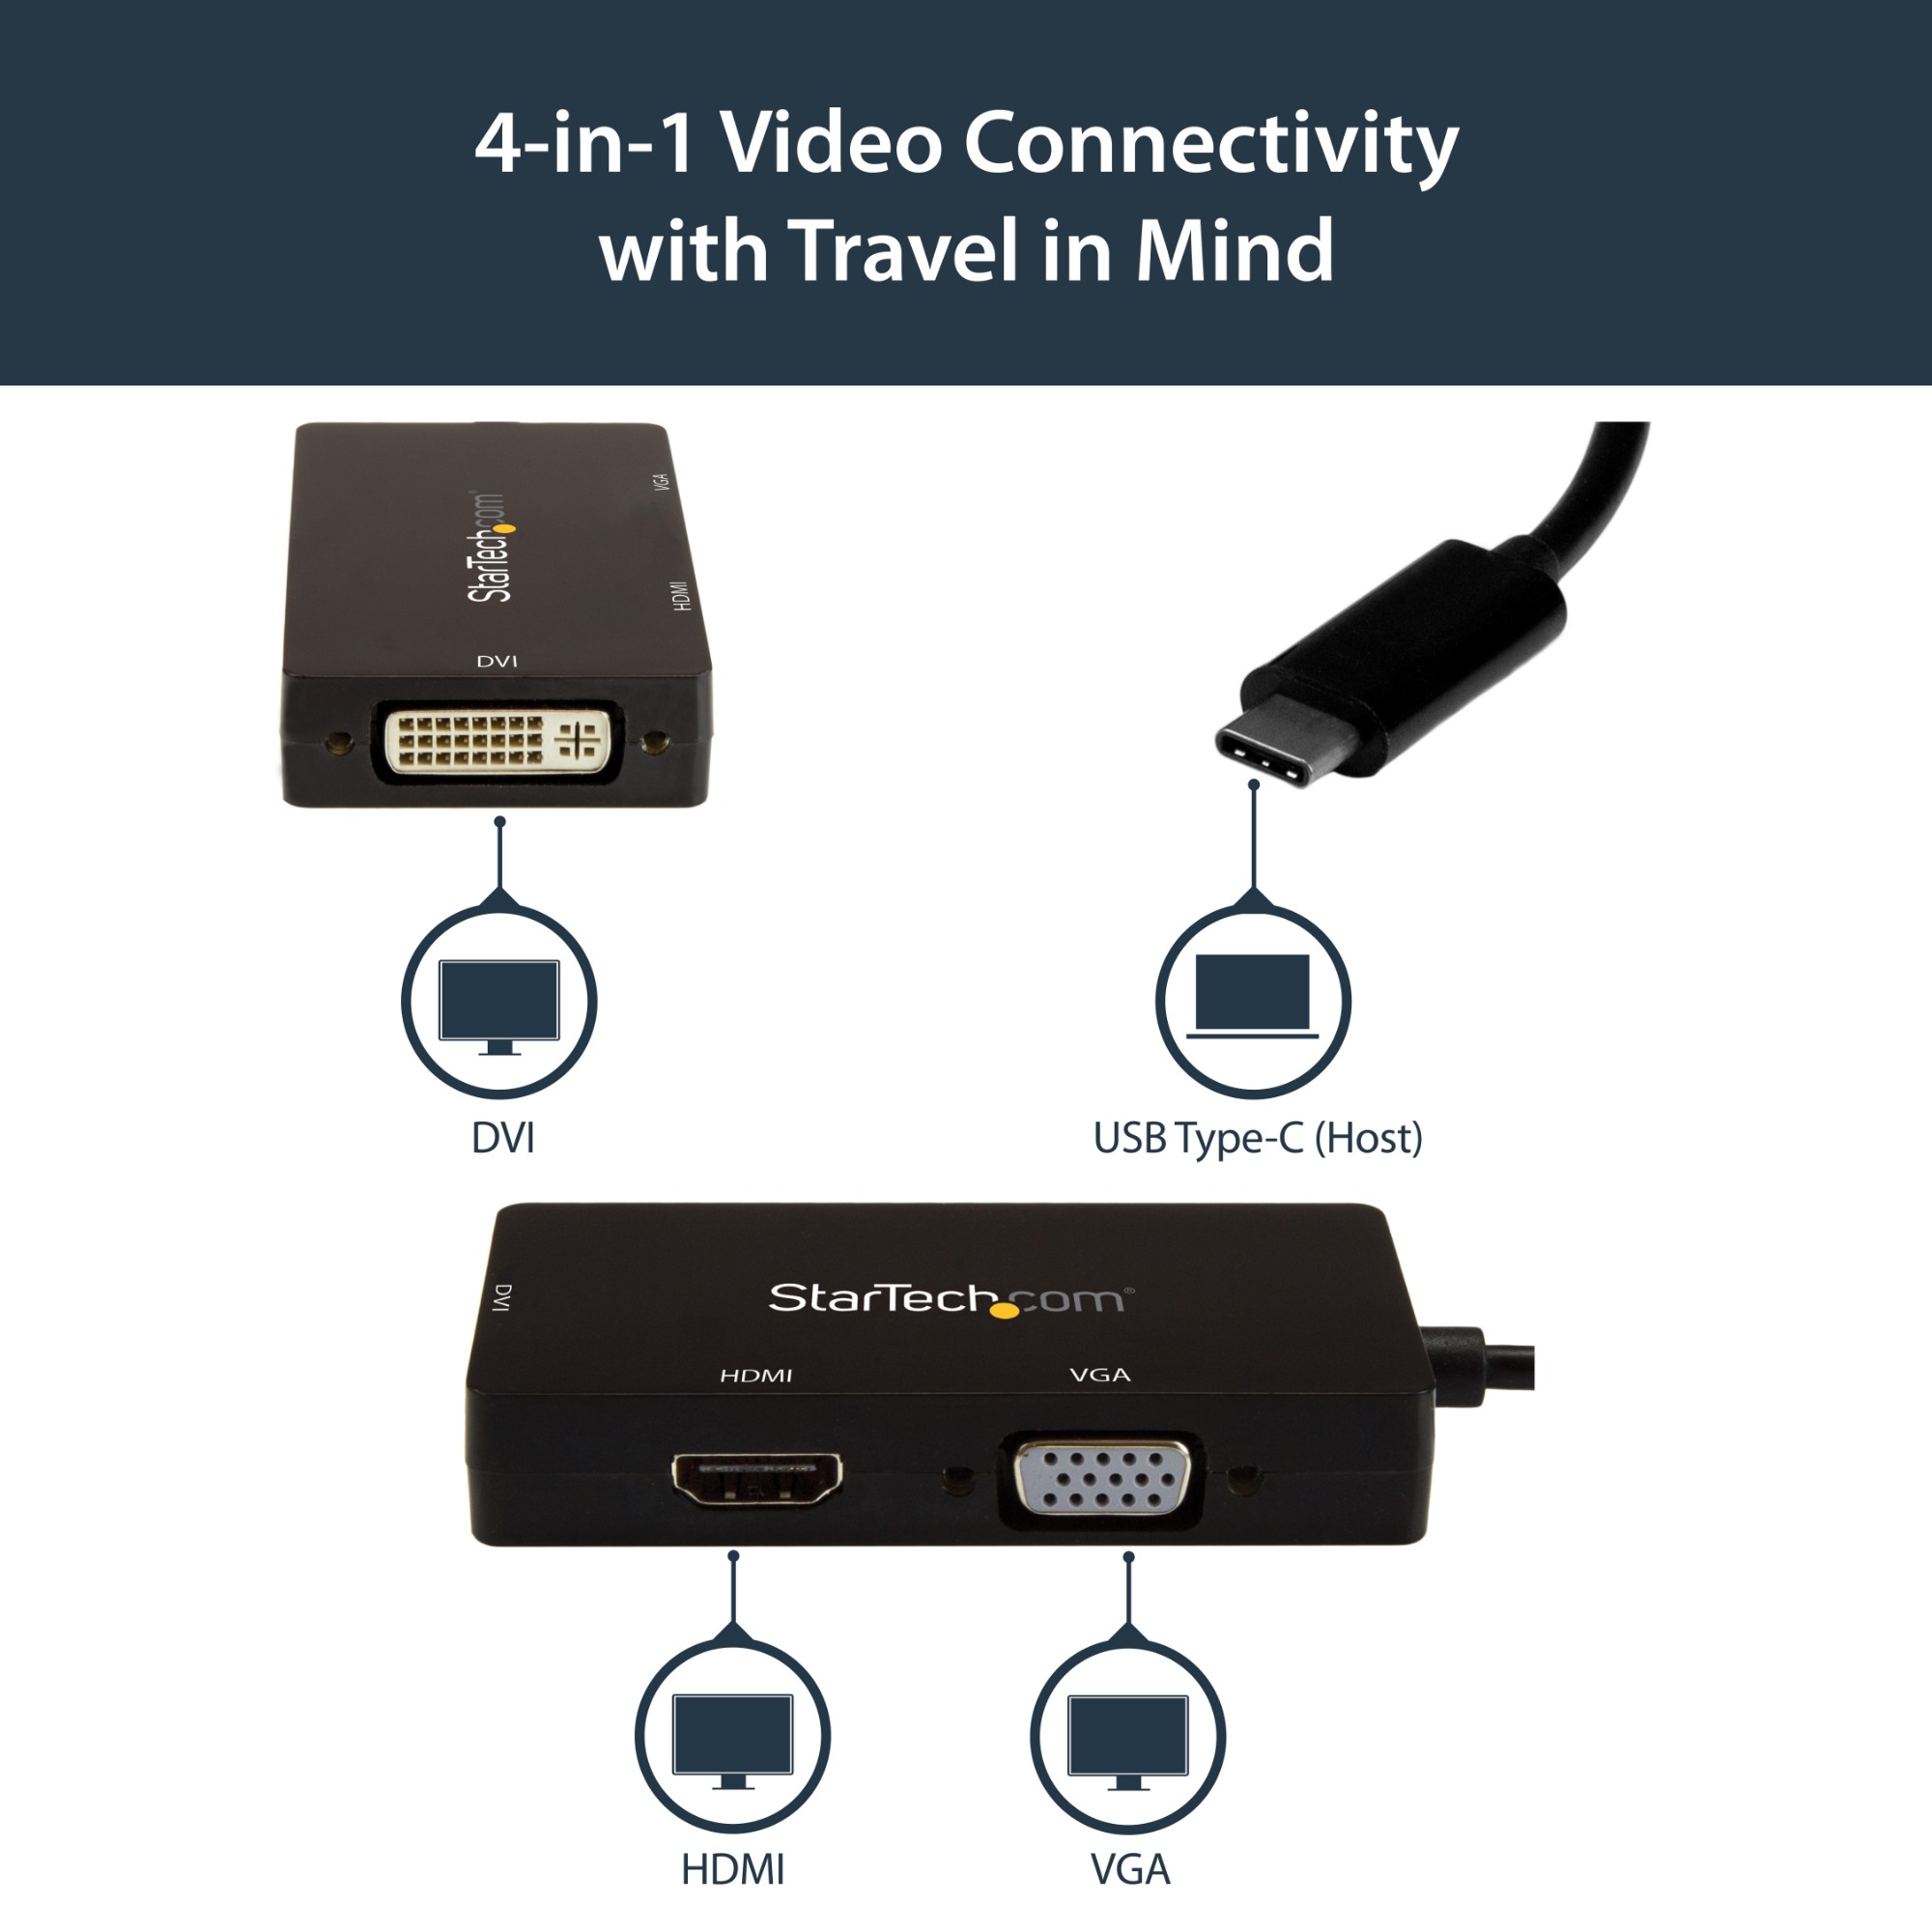 StarTech.com USB-C Multiport Video Adapter - 3-in-1 - 4K 30Hz - Black